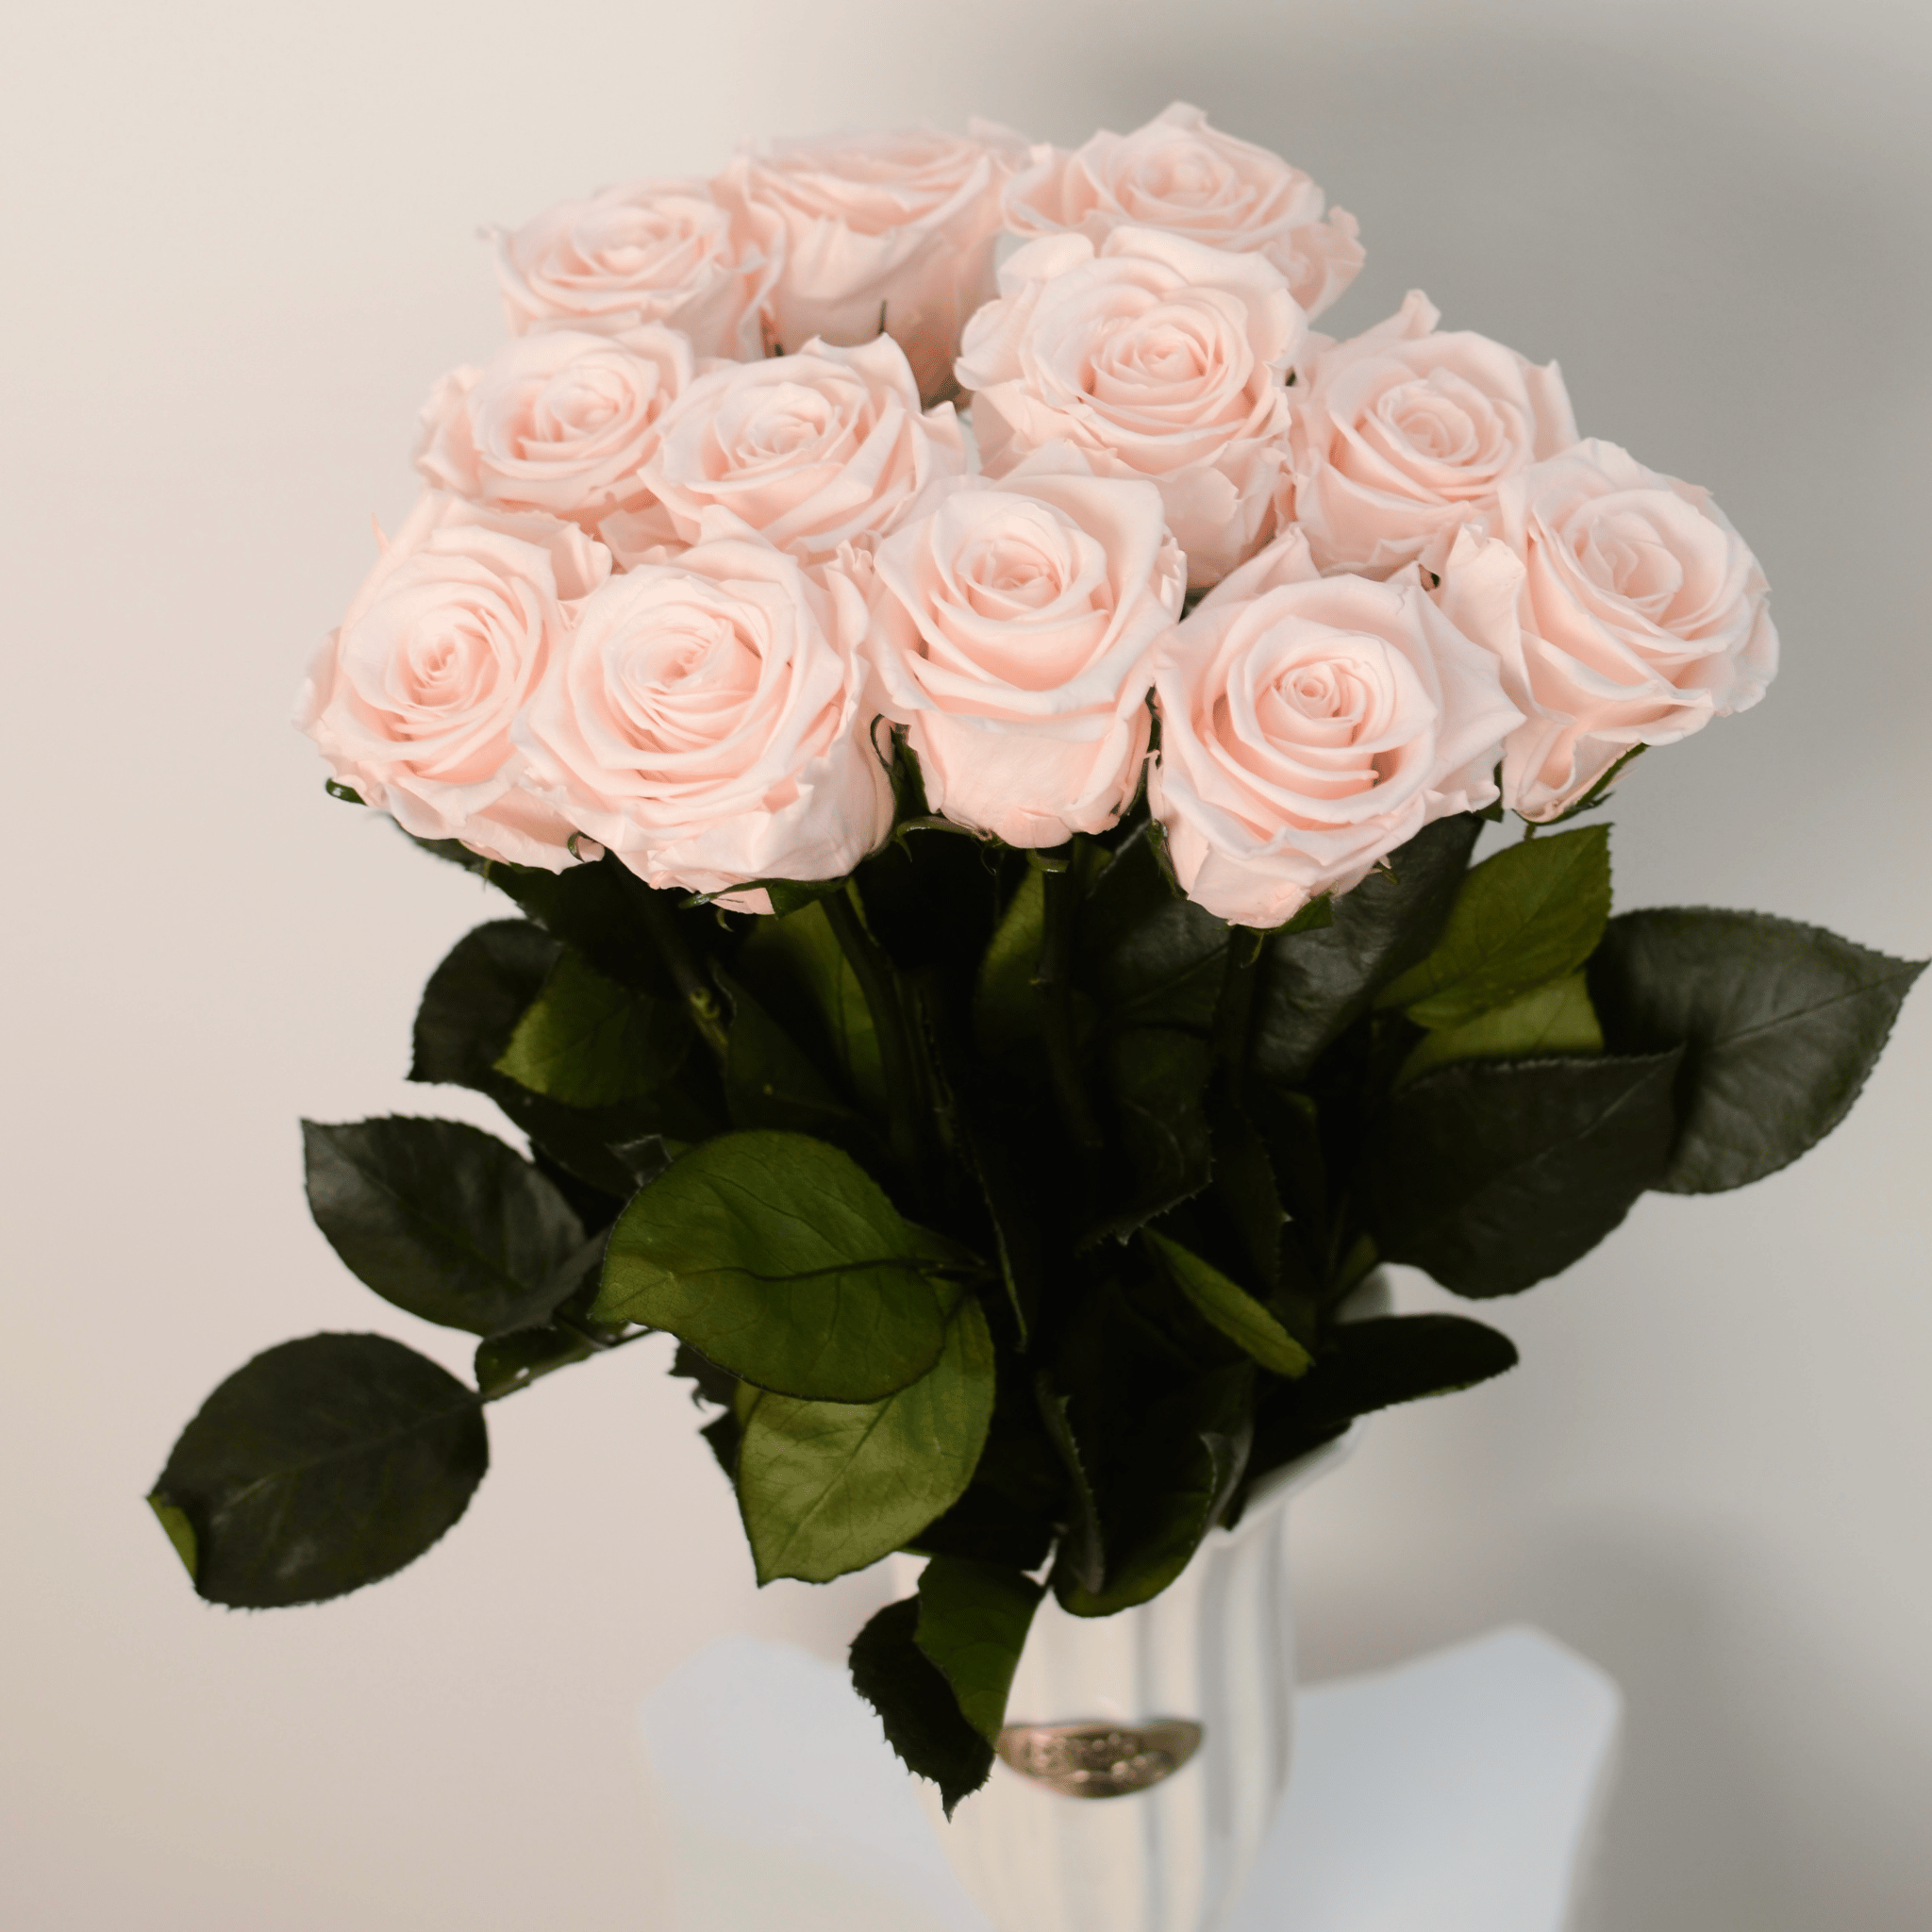 The Aurora Ceramic Vase with Forever Rose Bouquet